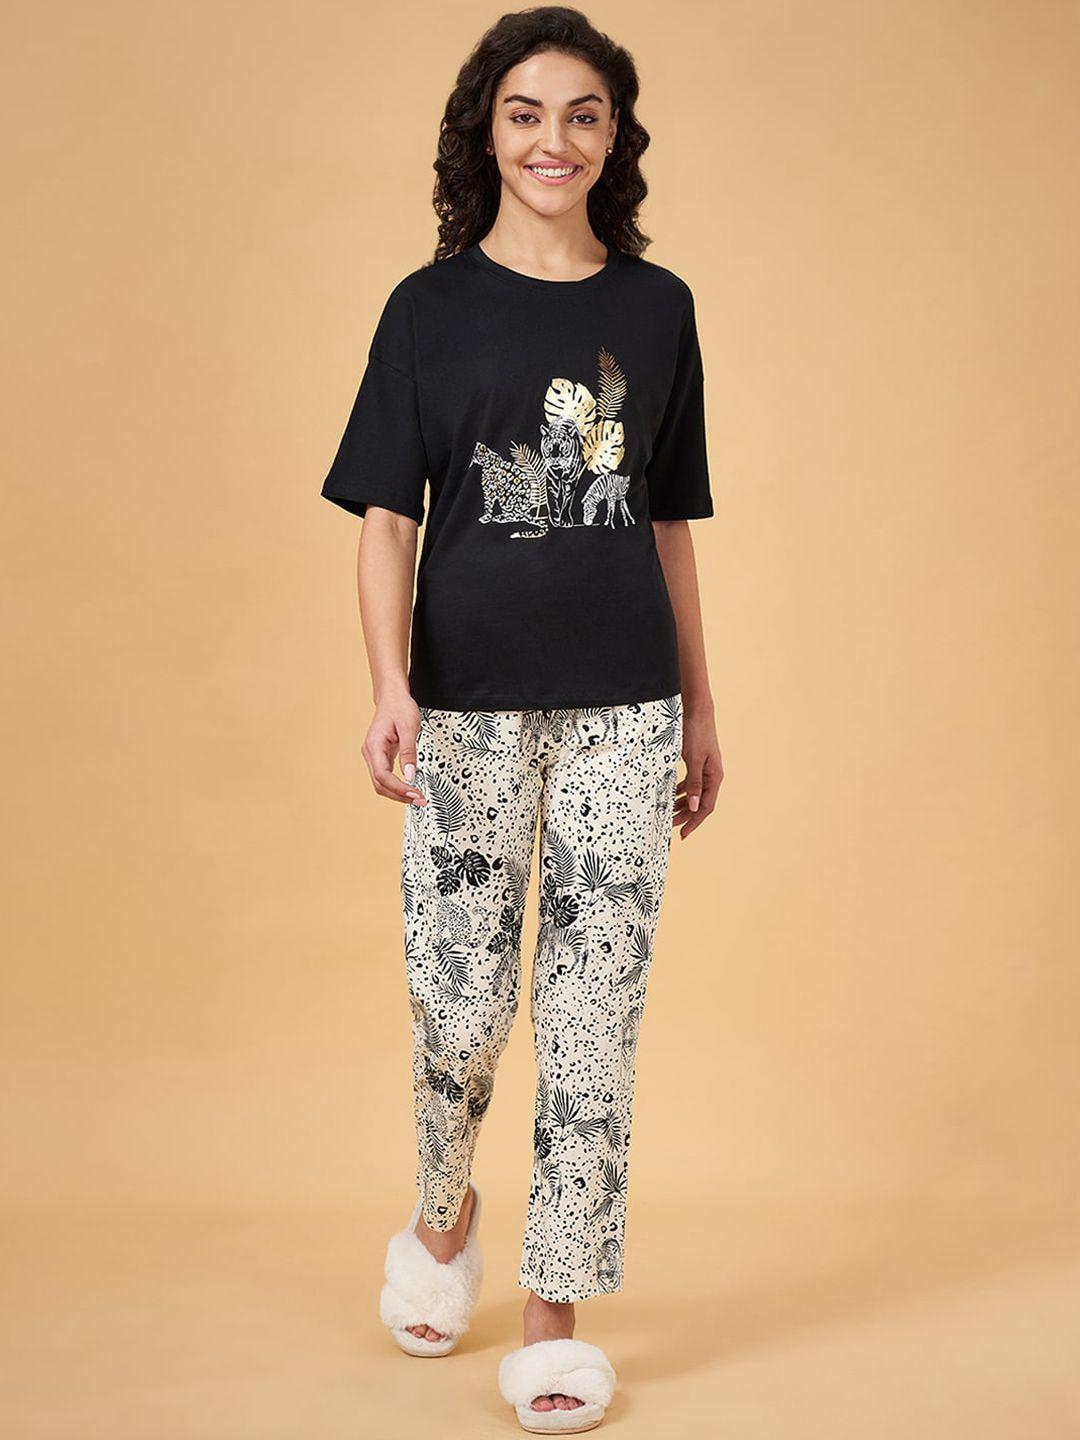 dreamz by pantaloons printed cotton t-shirt with pyjamas night suit